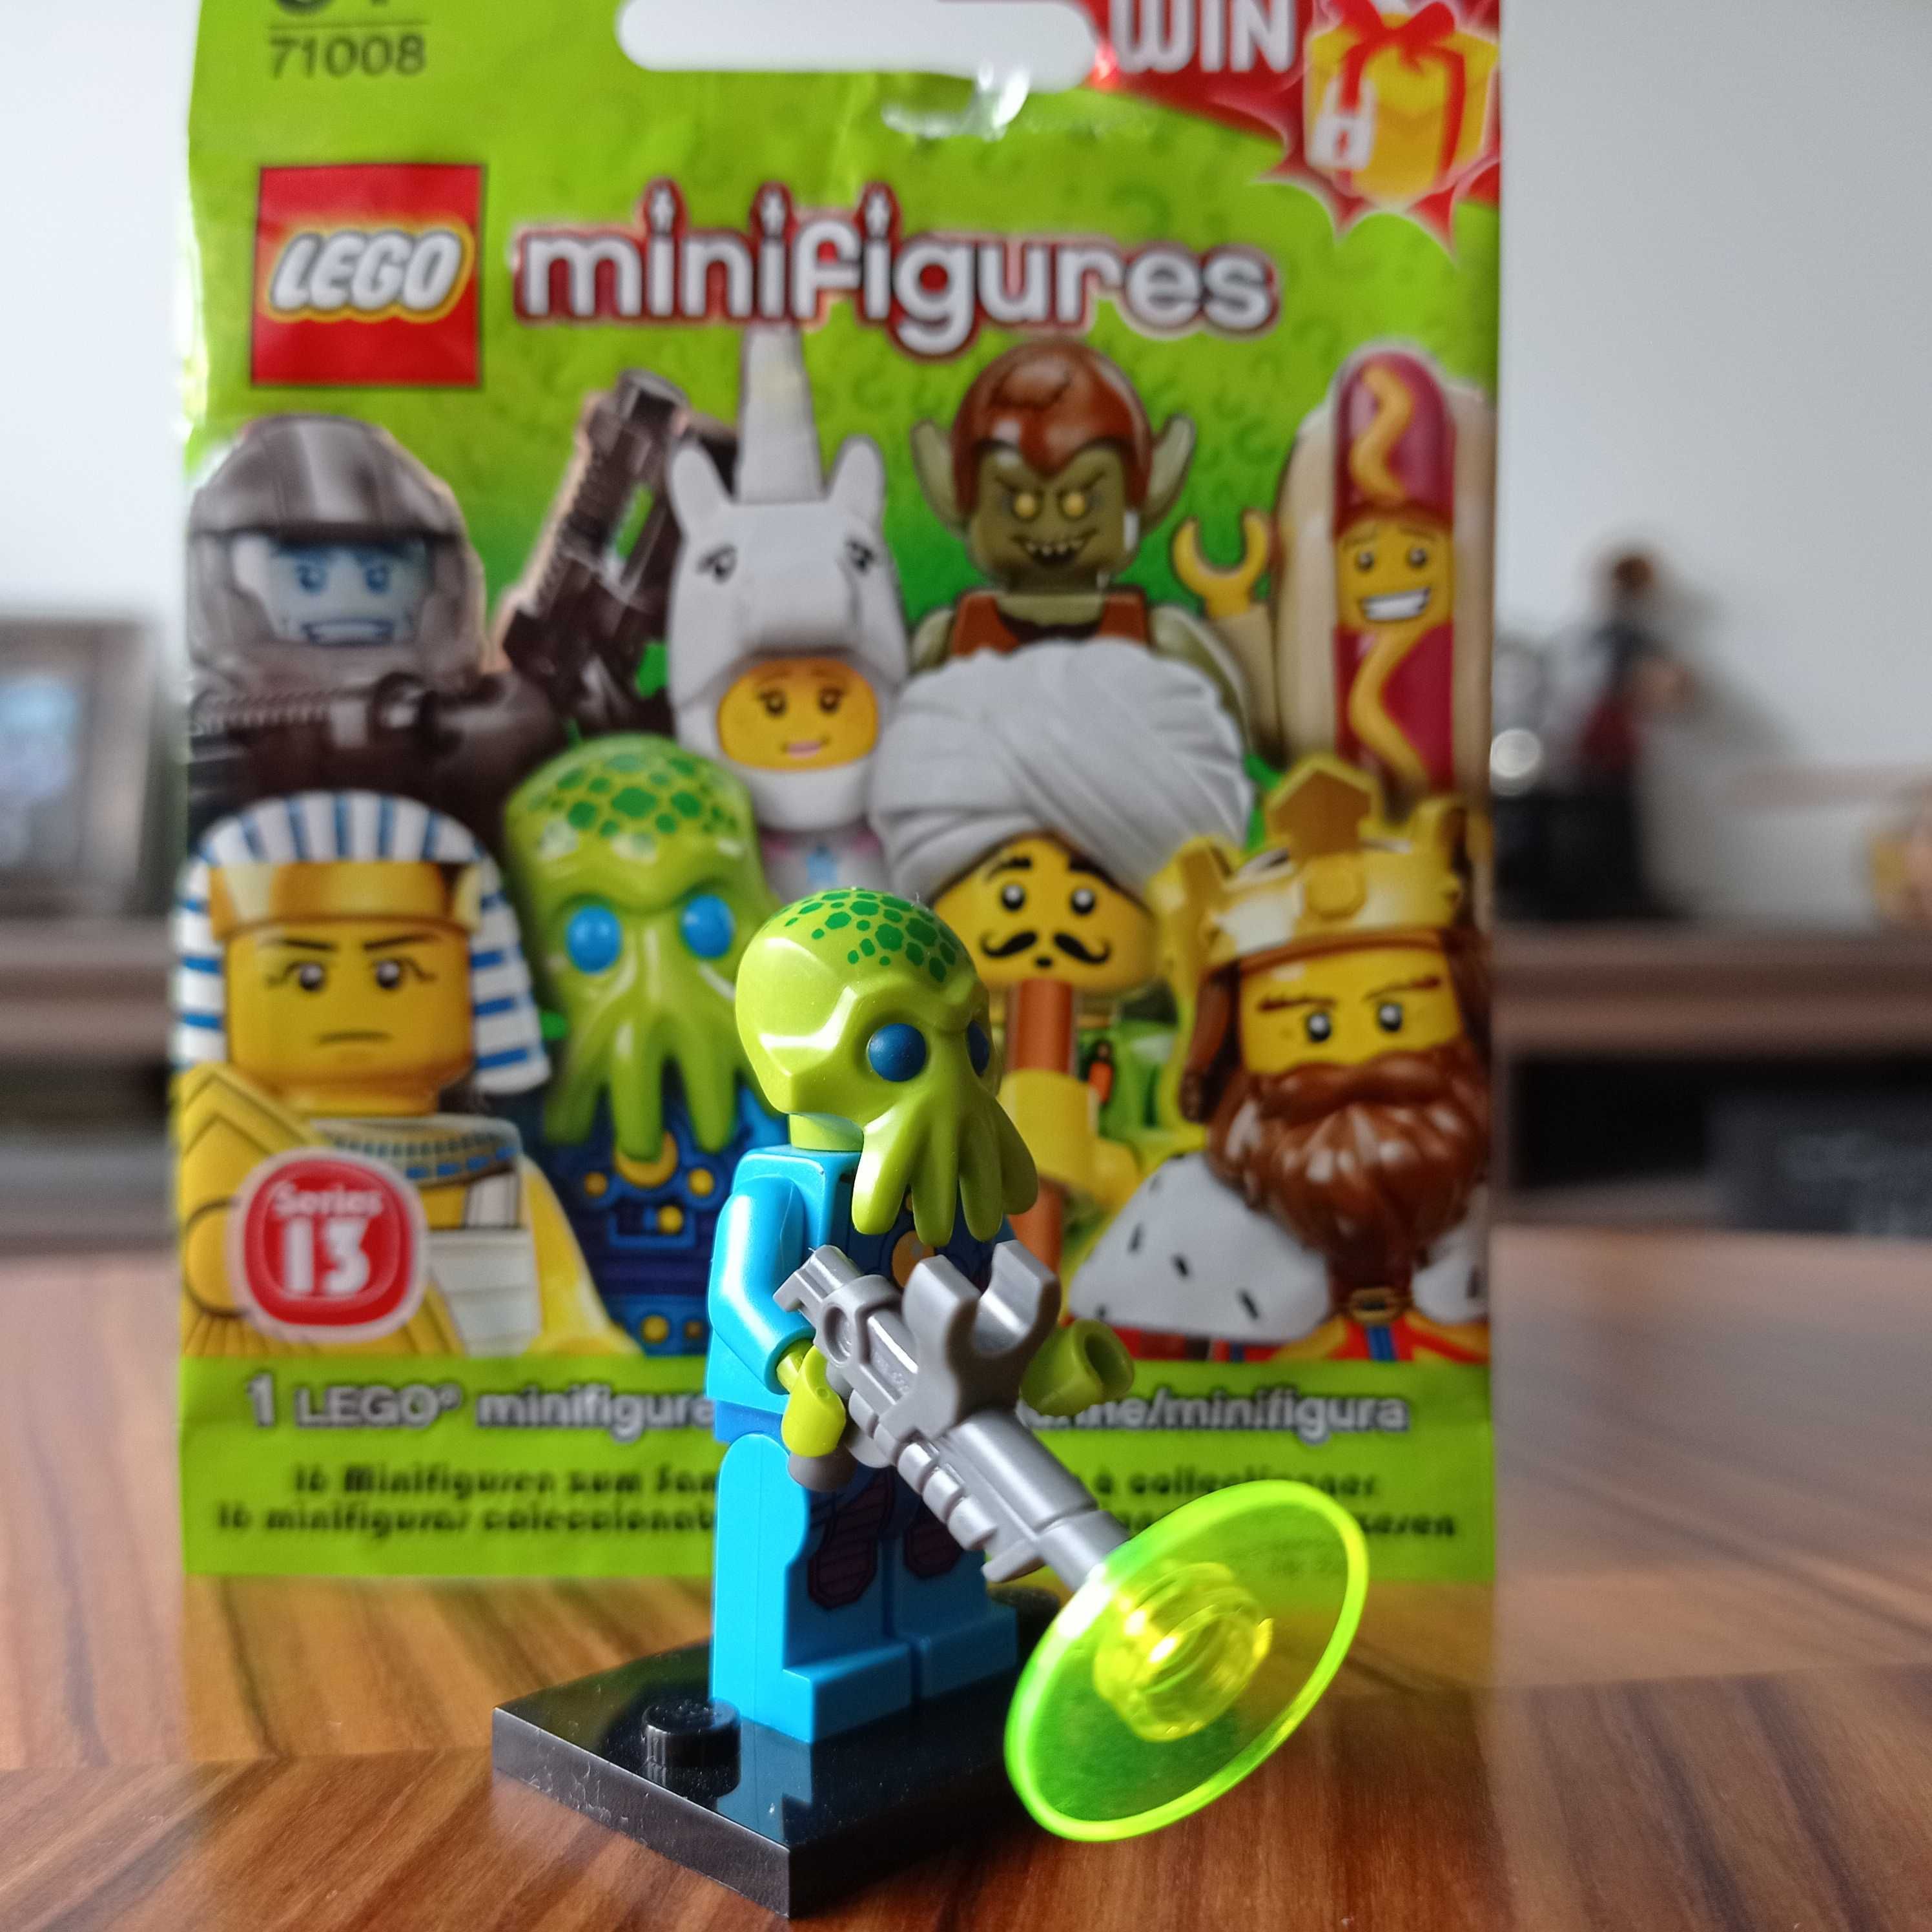 LEGO Kosmita Alien Obcy Space figurka ludzik minifigures figurka